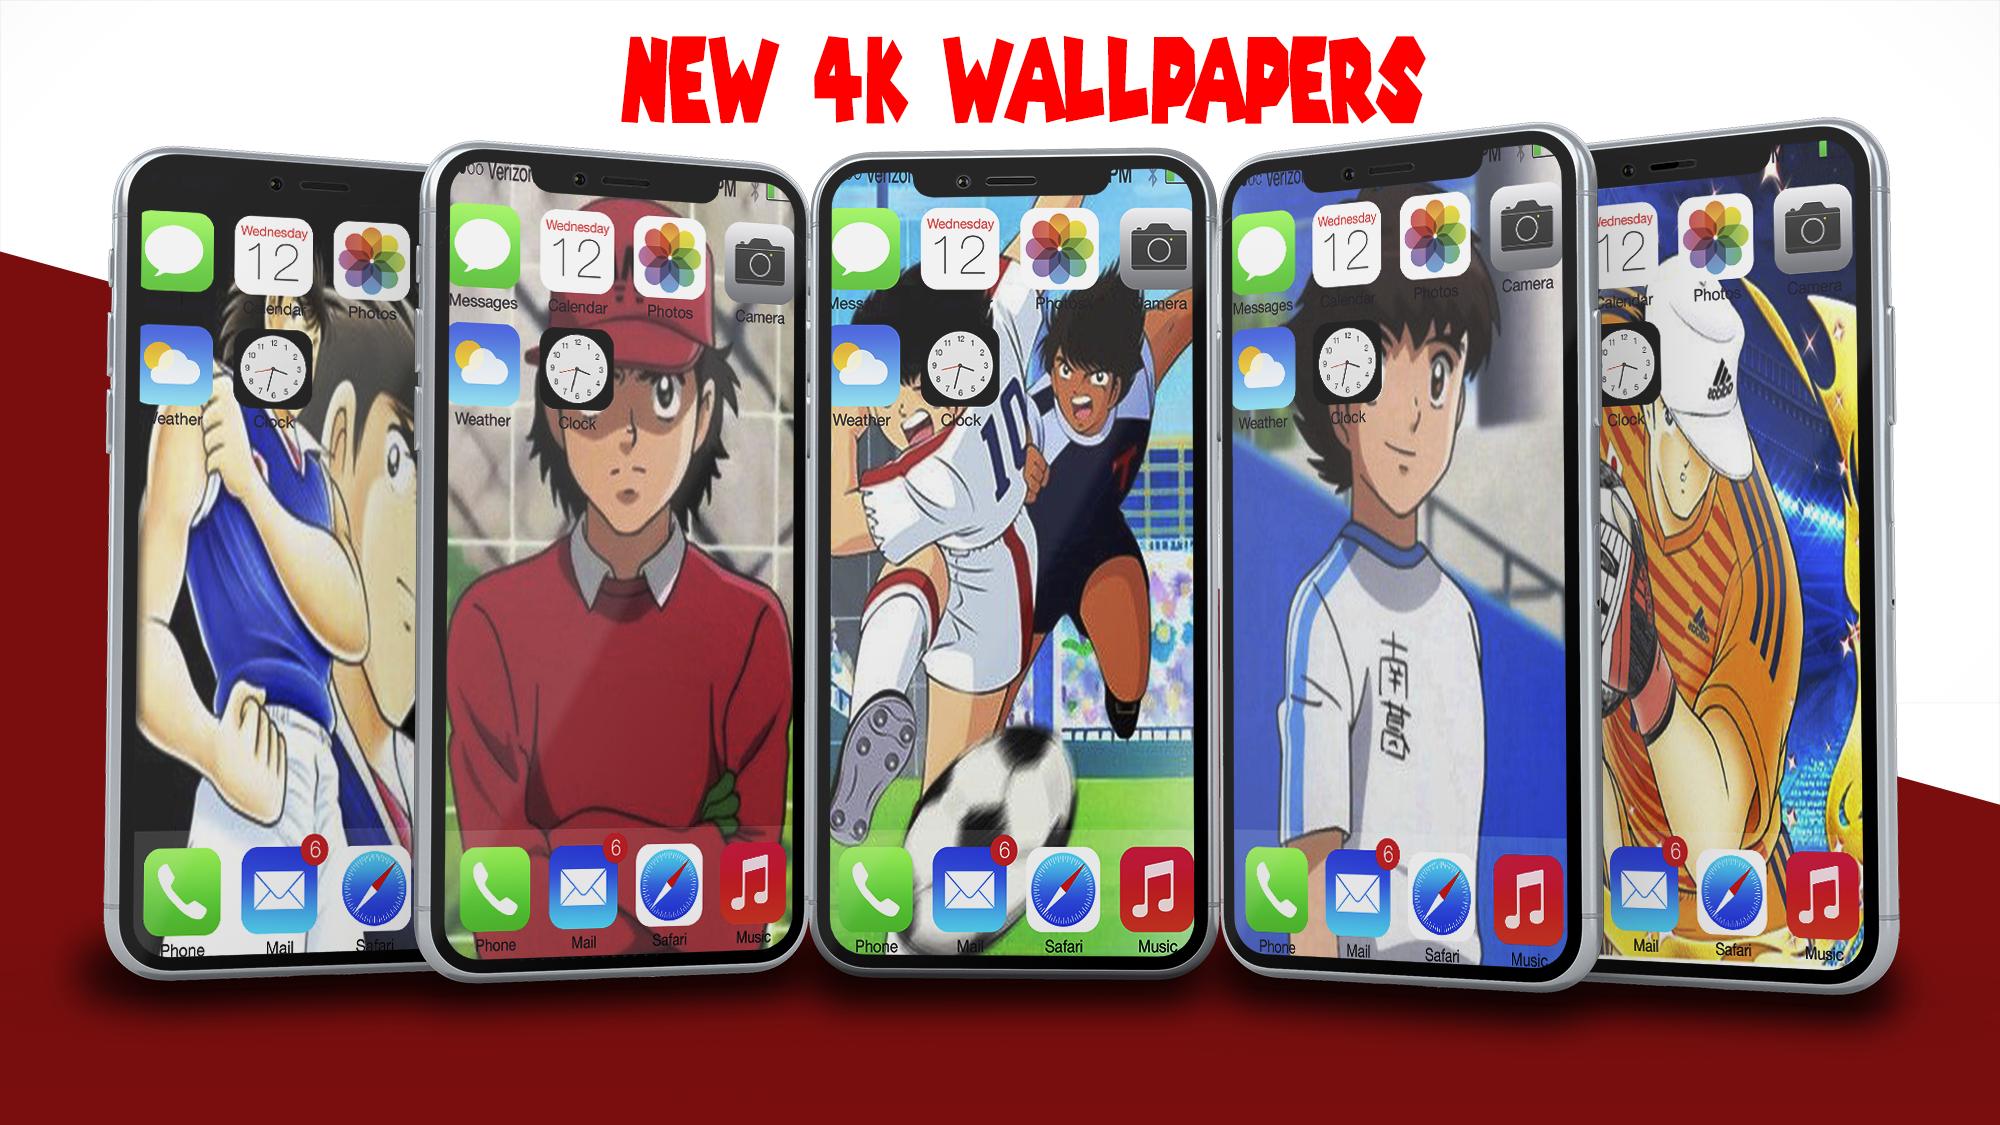 Captain Anime Tsubasa New Dream Team Wallpaper For Android Apk